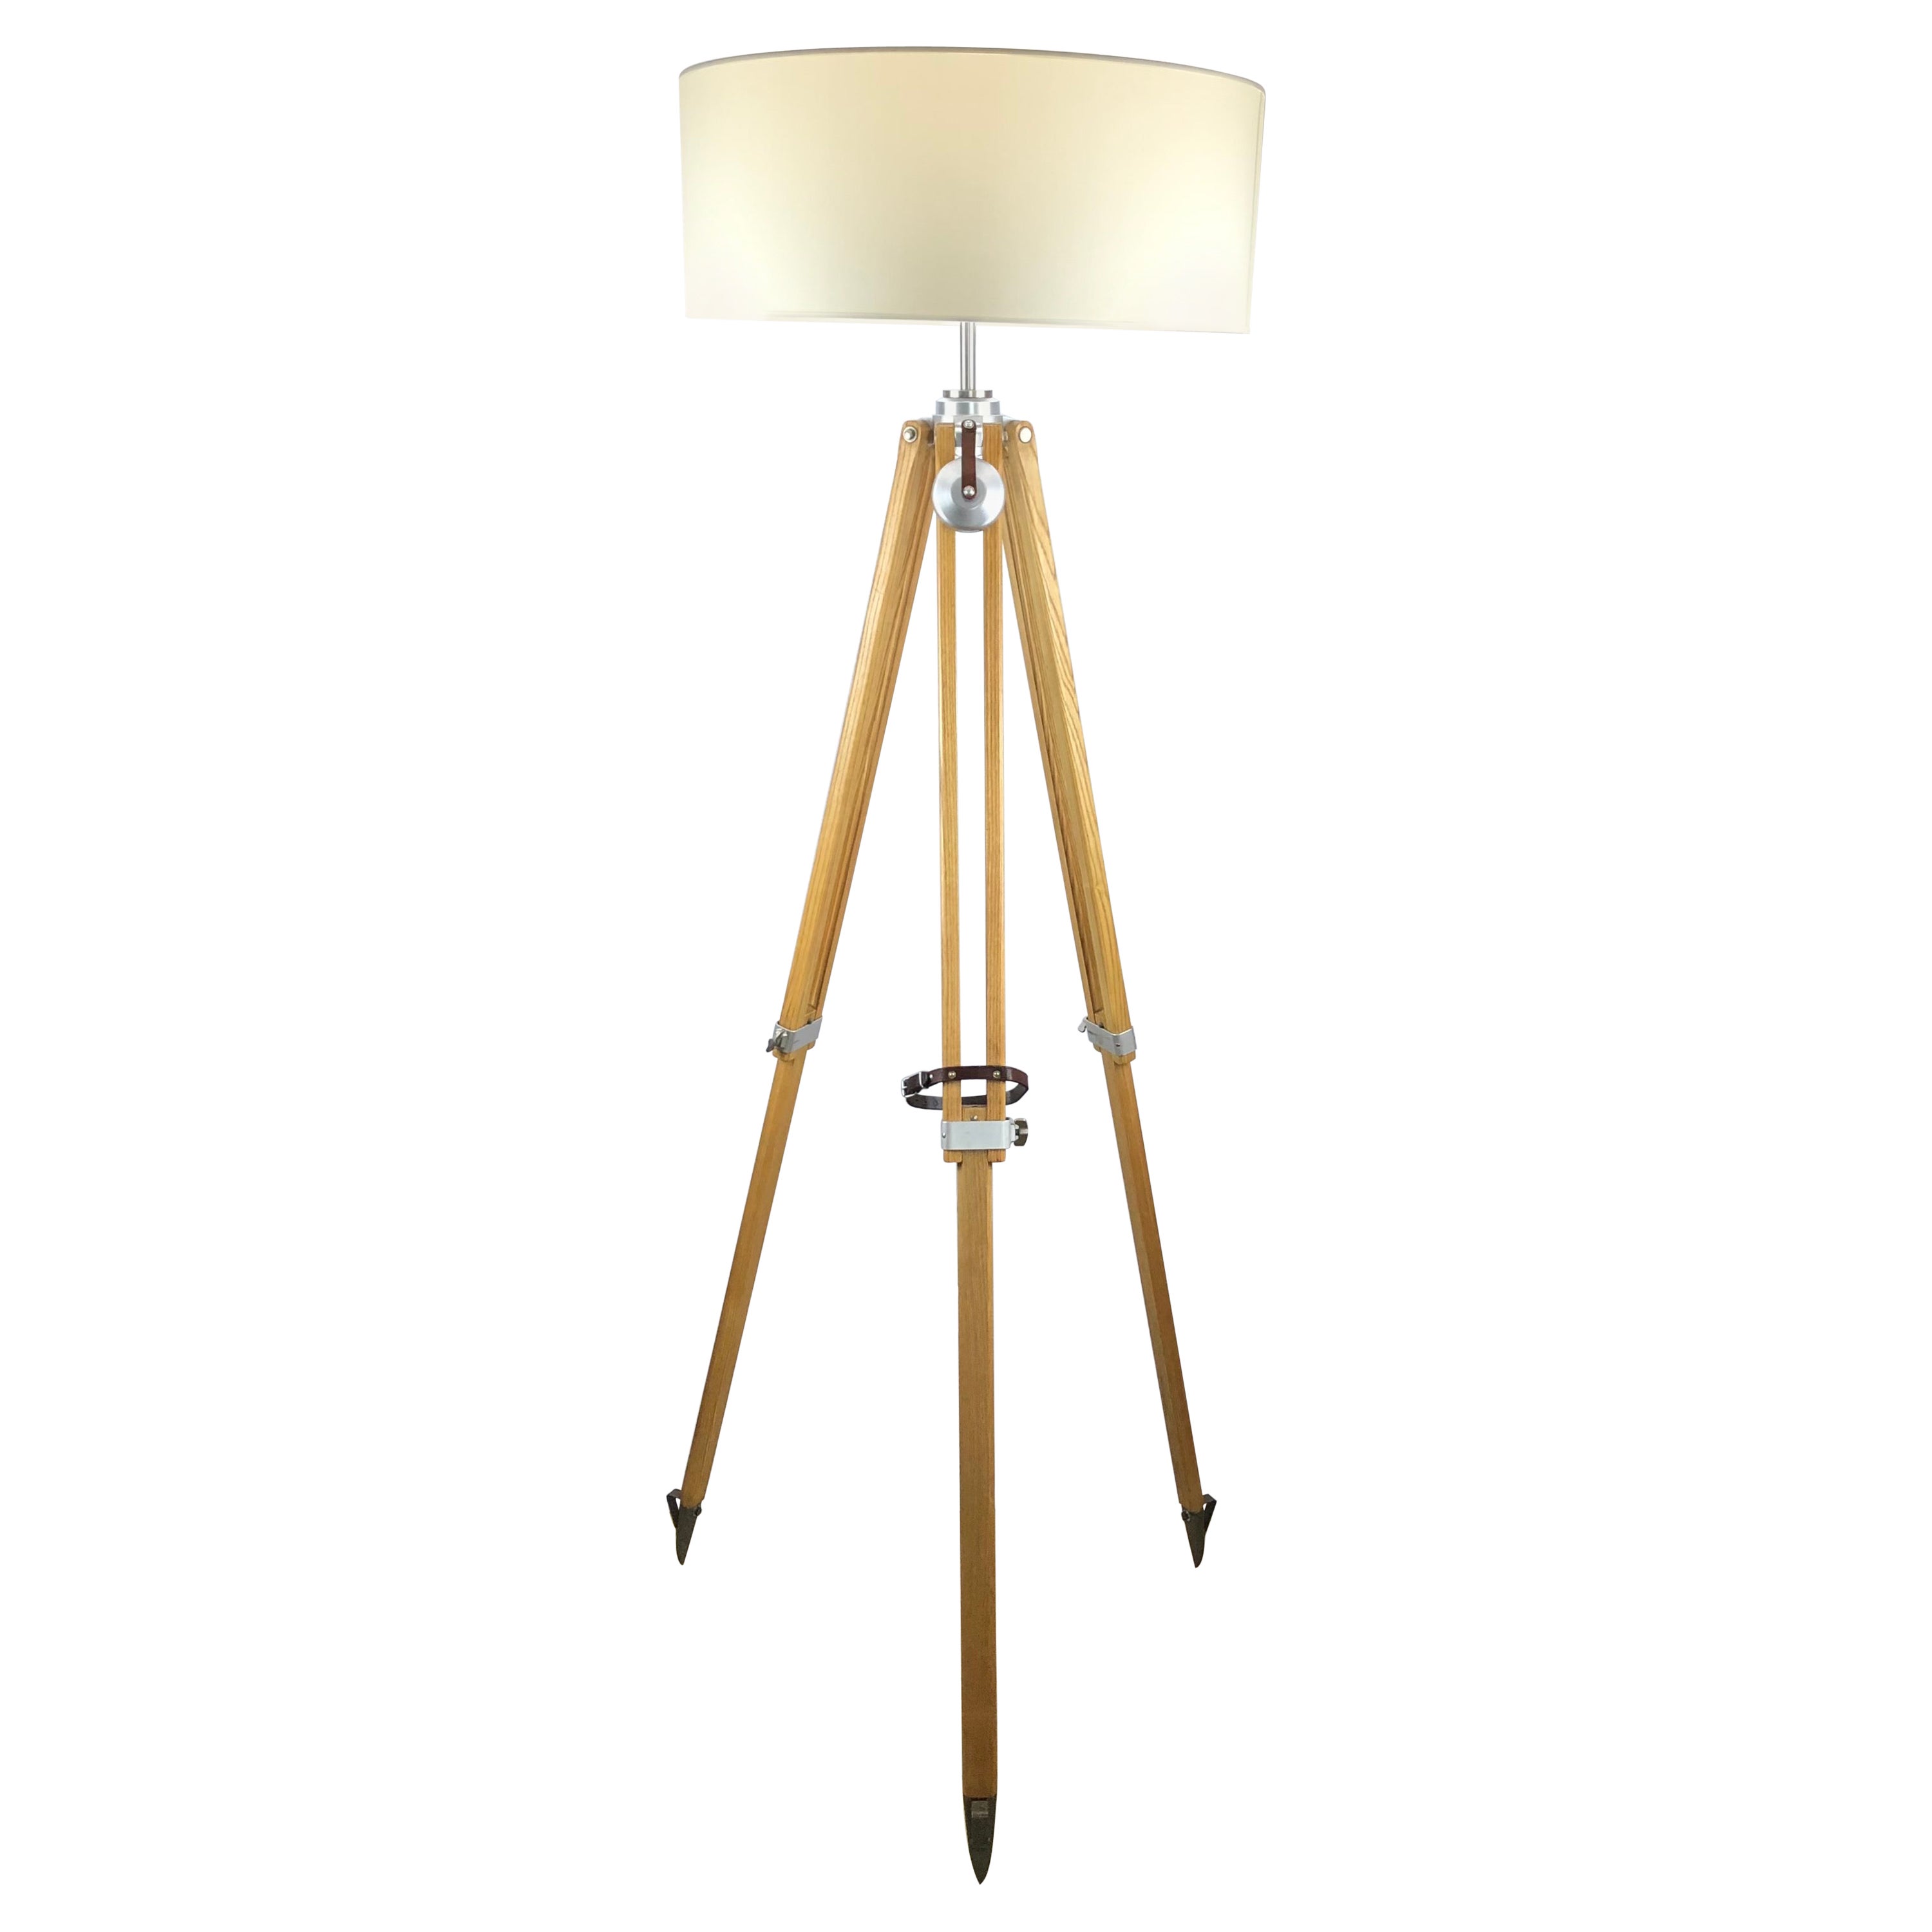 Adjustable Wooden Tripod Floor Lamp Natural Finish by Kern Aarau, Switzerland For Sale